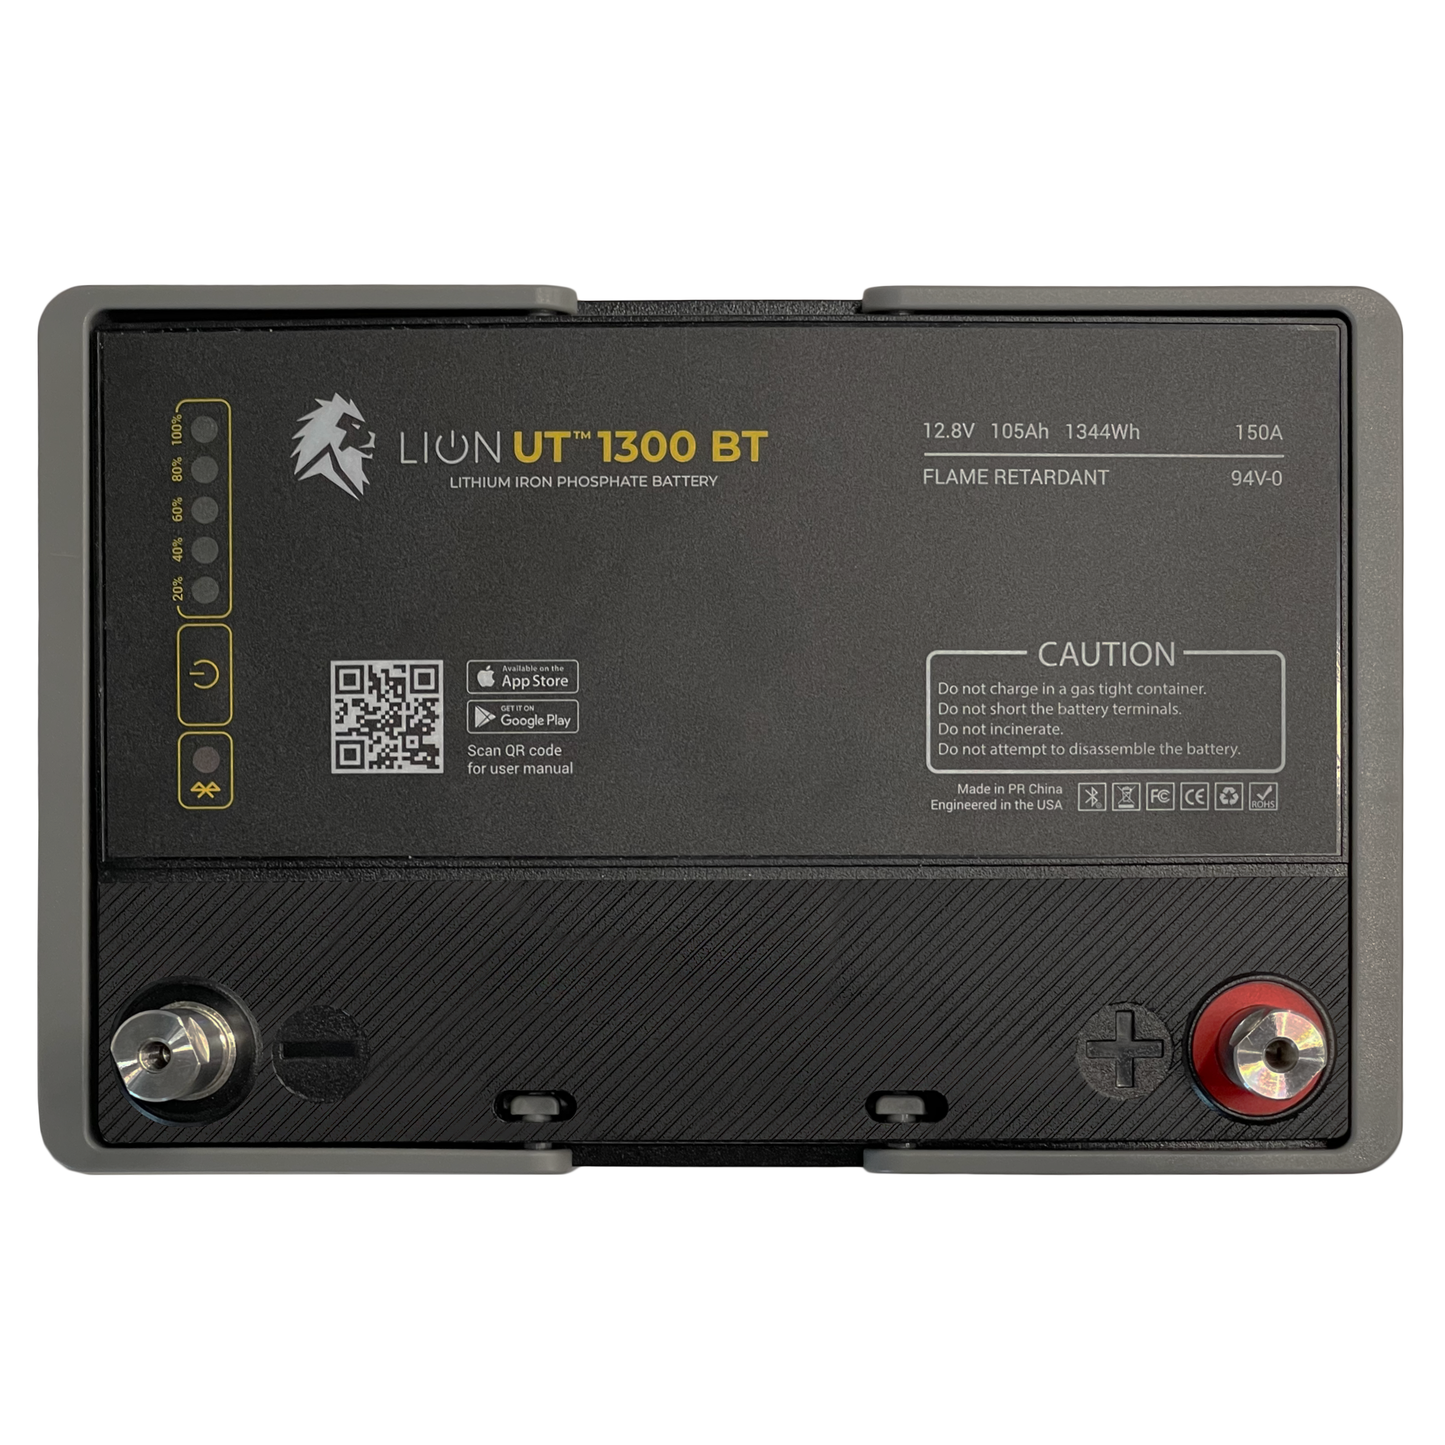 Lion UTTM 1300 BT HTR 12V Battery with Heater, 105Ah (1344Wh) LiFePO4, 12.8V Bluetooth$695